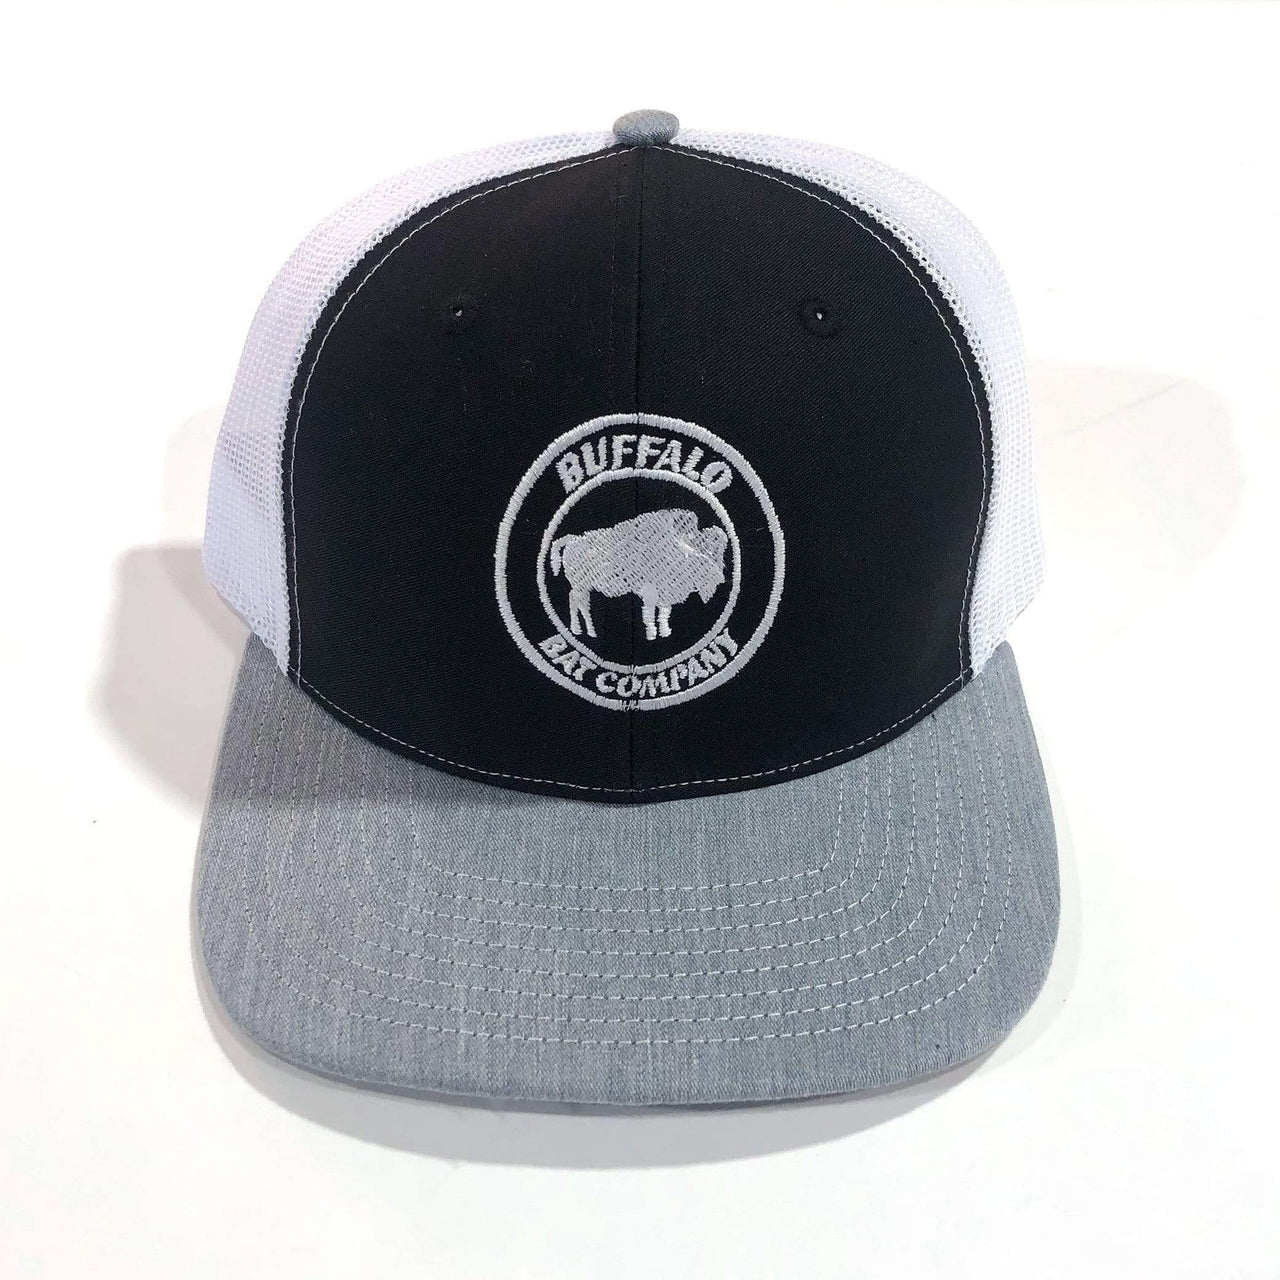 Buffalo Bat Co Apparel Black | White | Grey Buffalo Bat Co. Trucker Hat